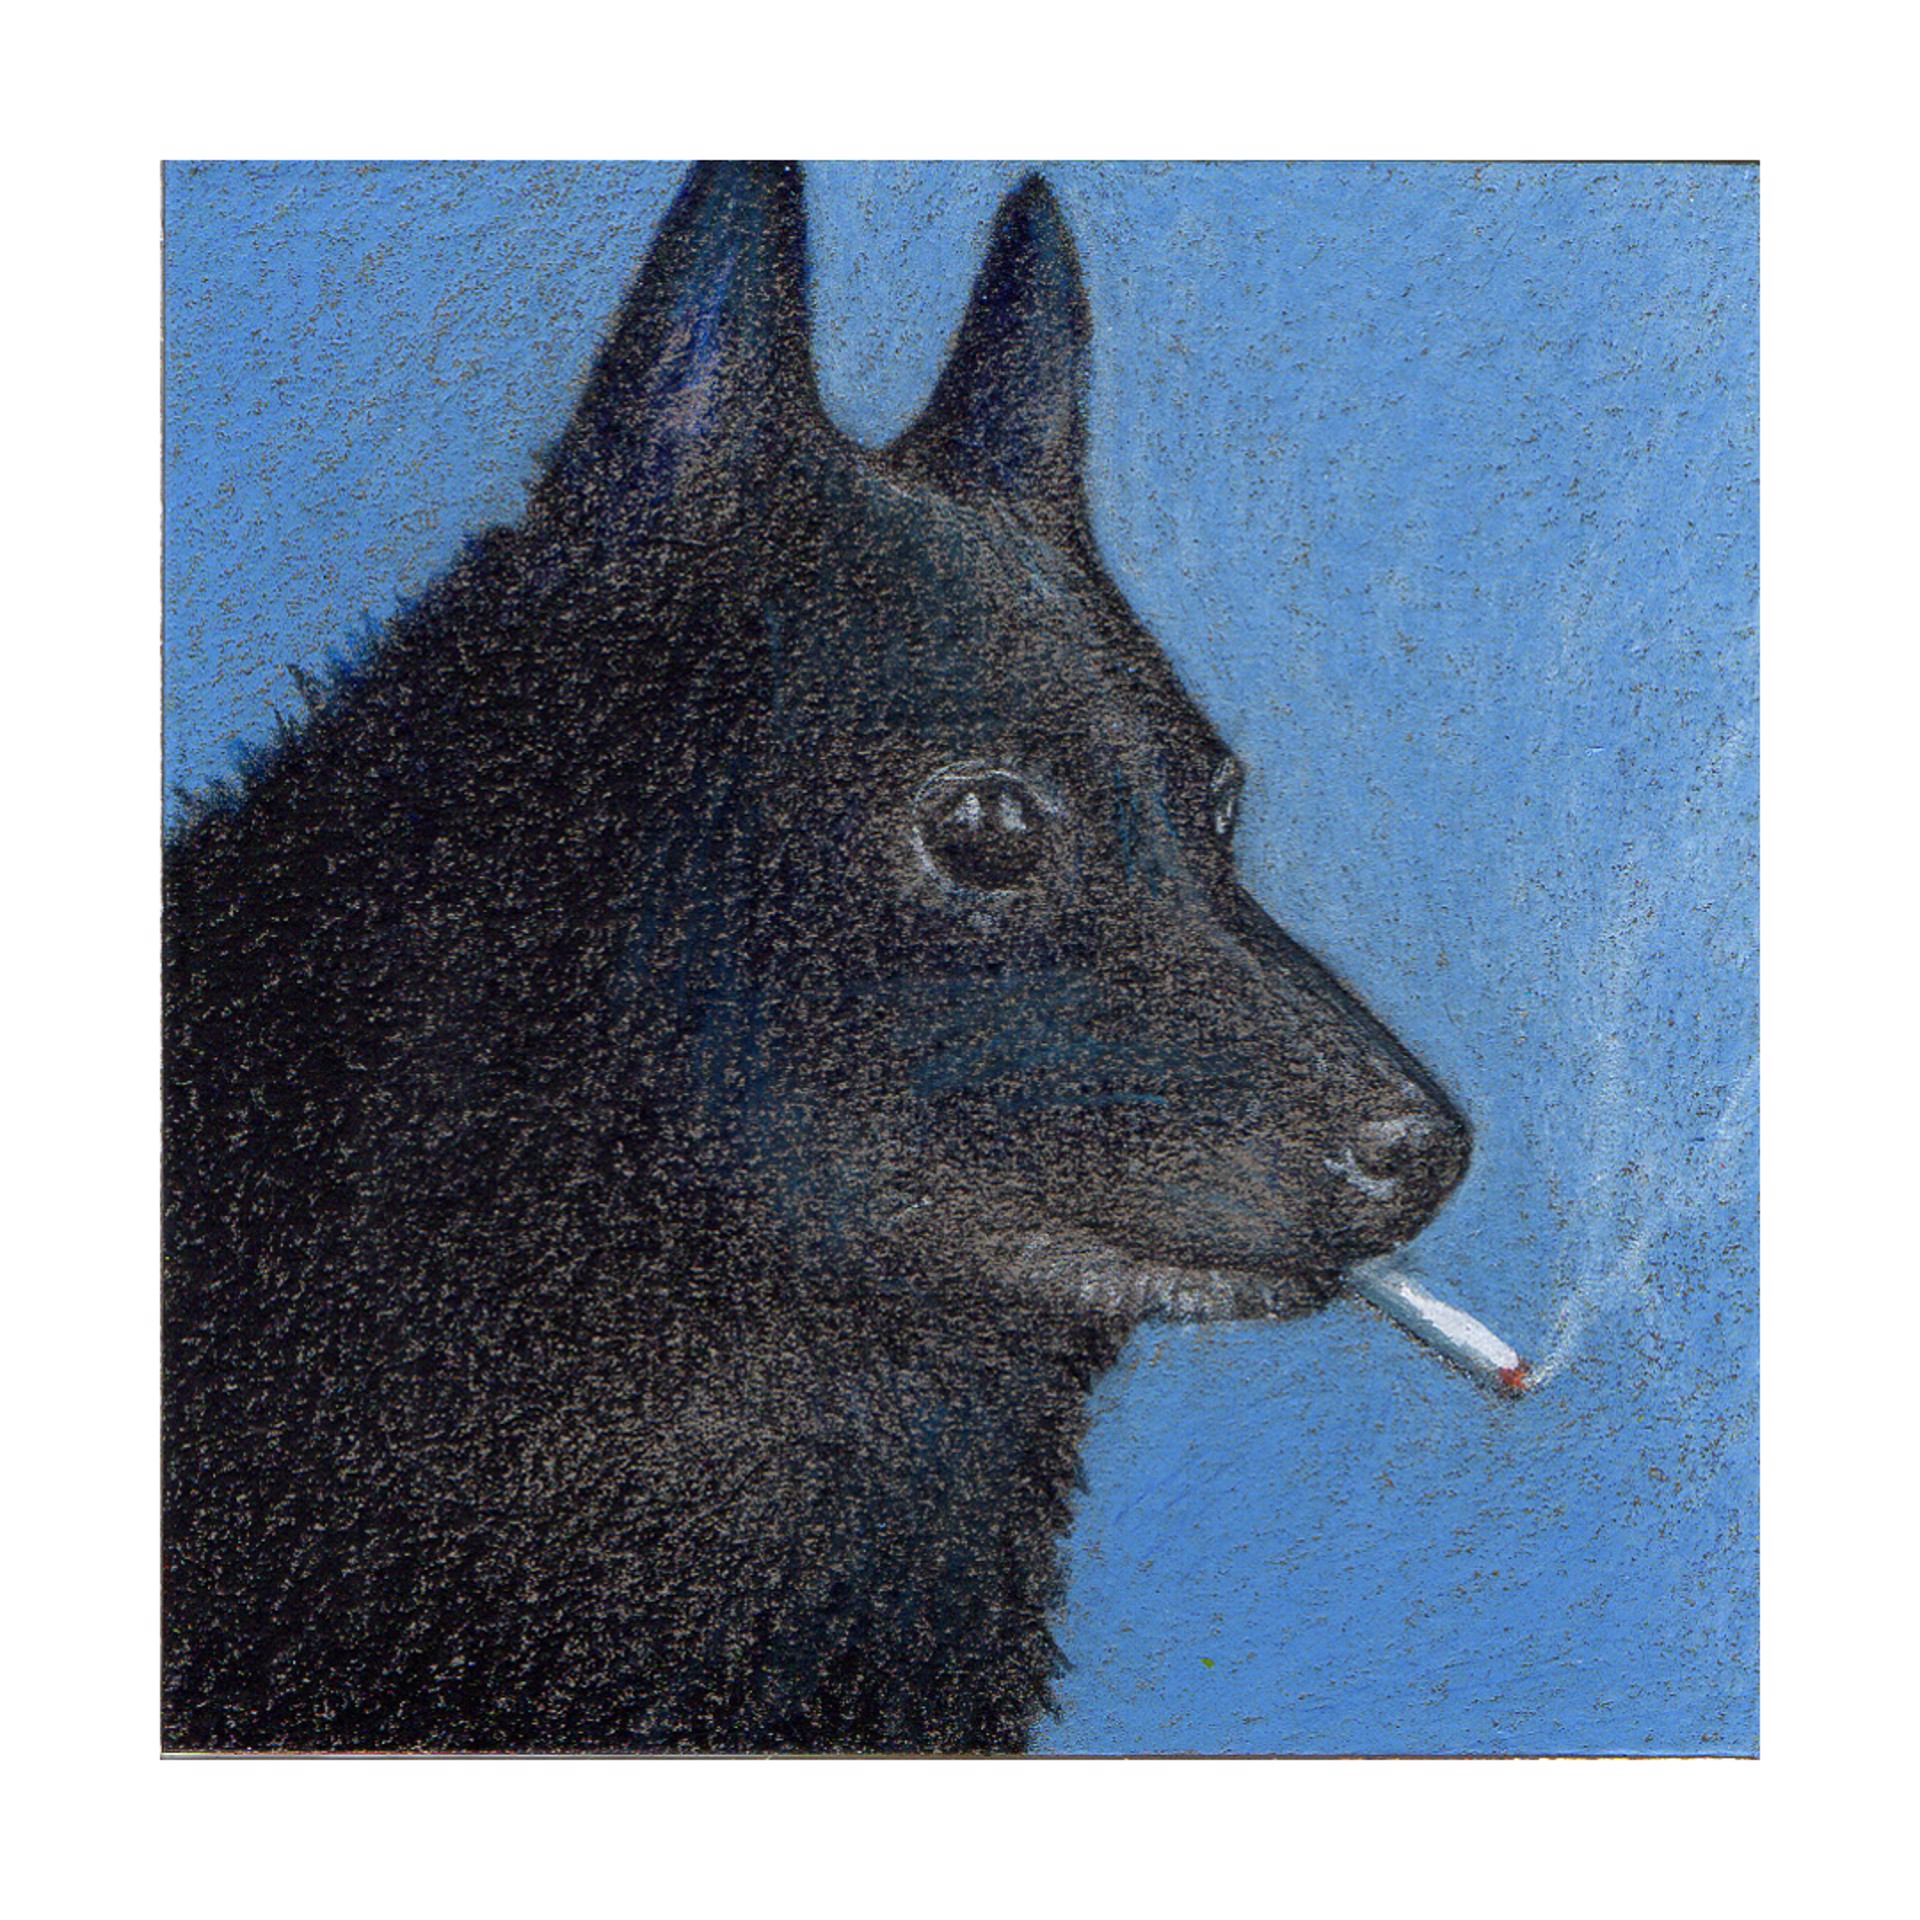 Dog Smoking a Cigarette #4 by Neva Mikulicz